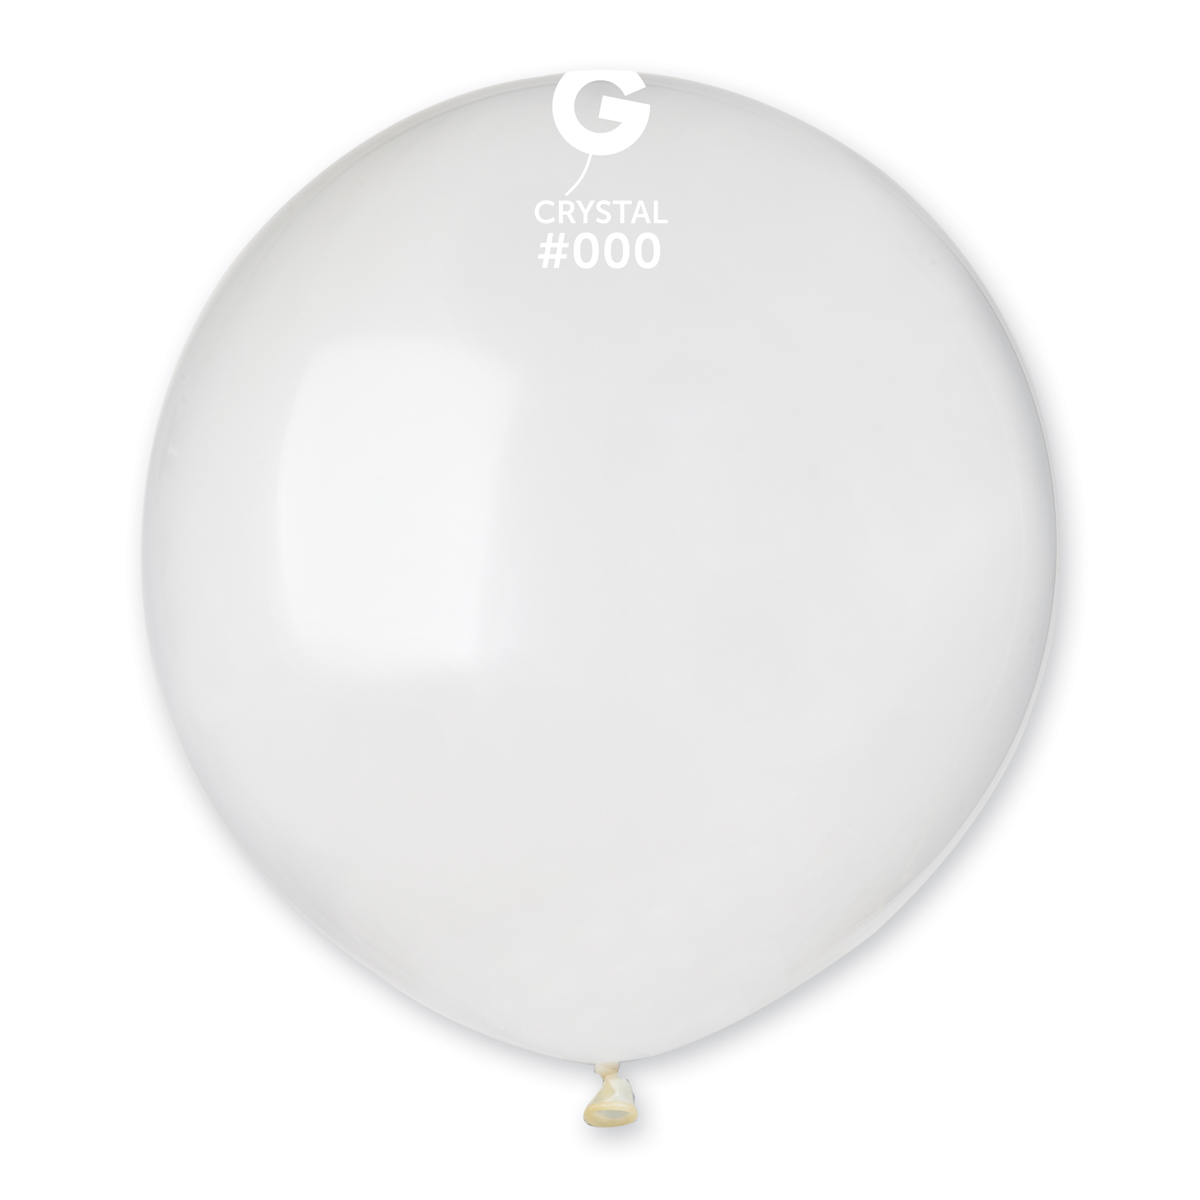 19" Gemar Latex Balloons (Bag of 25) Standard Crystal Clear